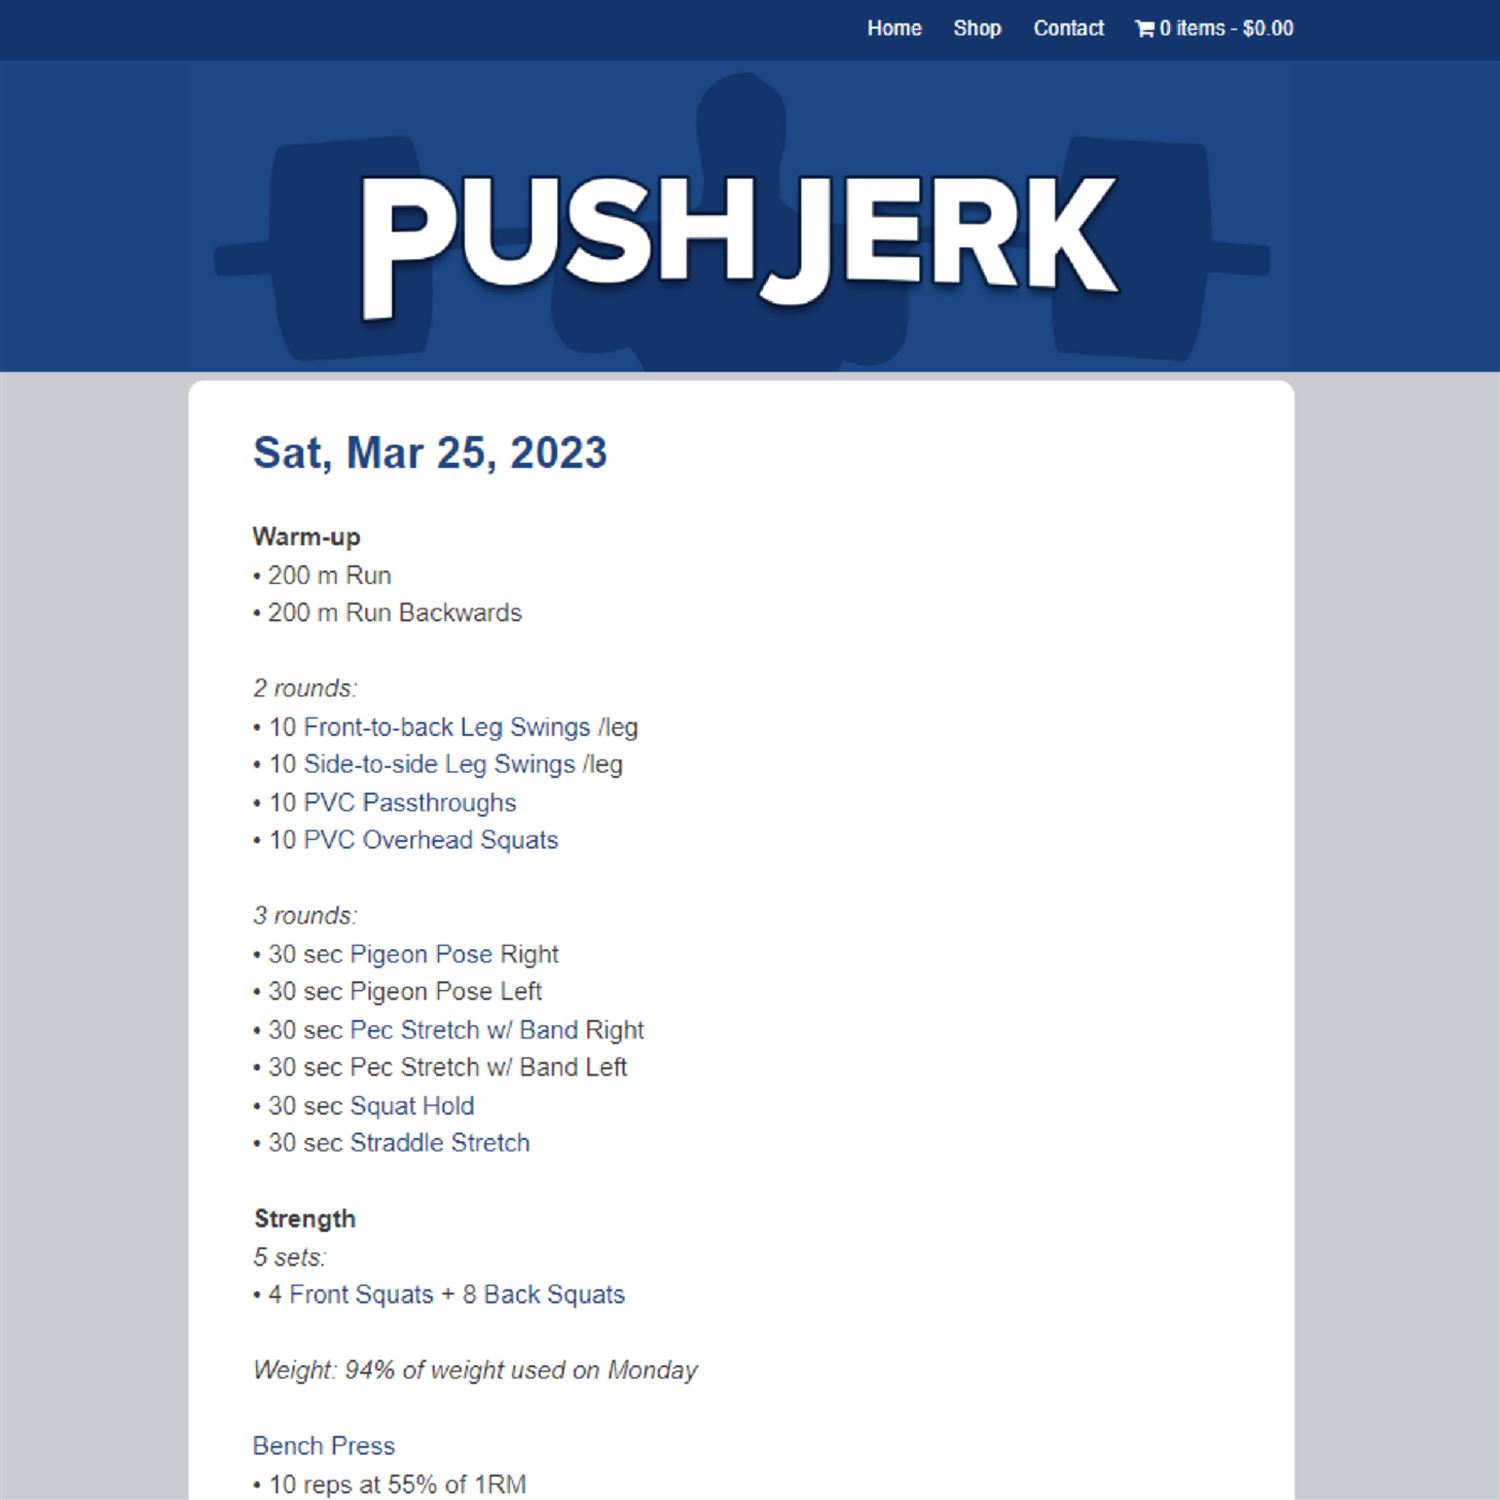 Workouts and pushjerk.com